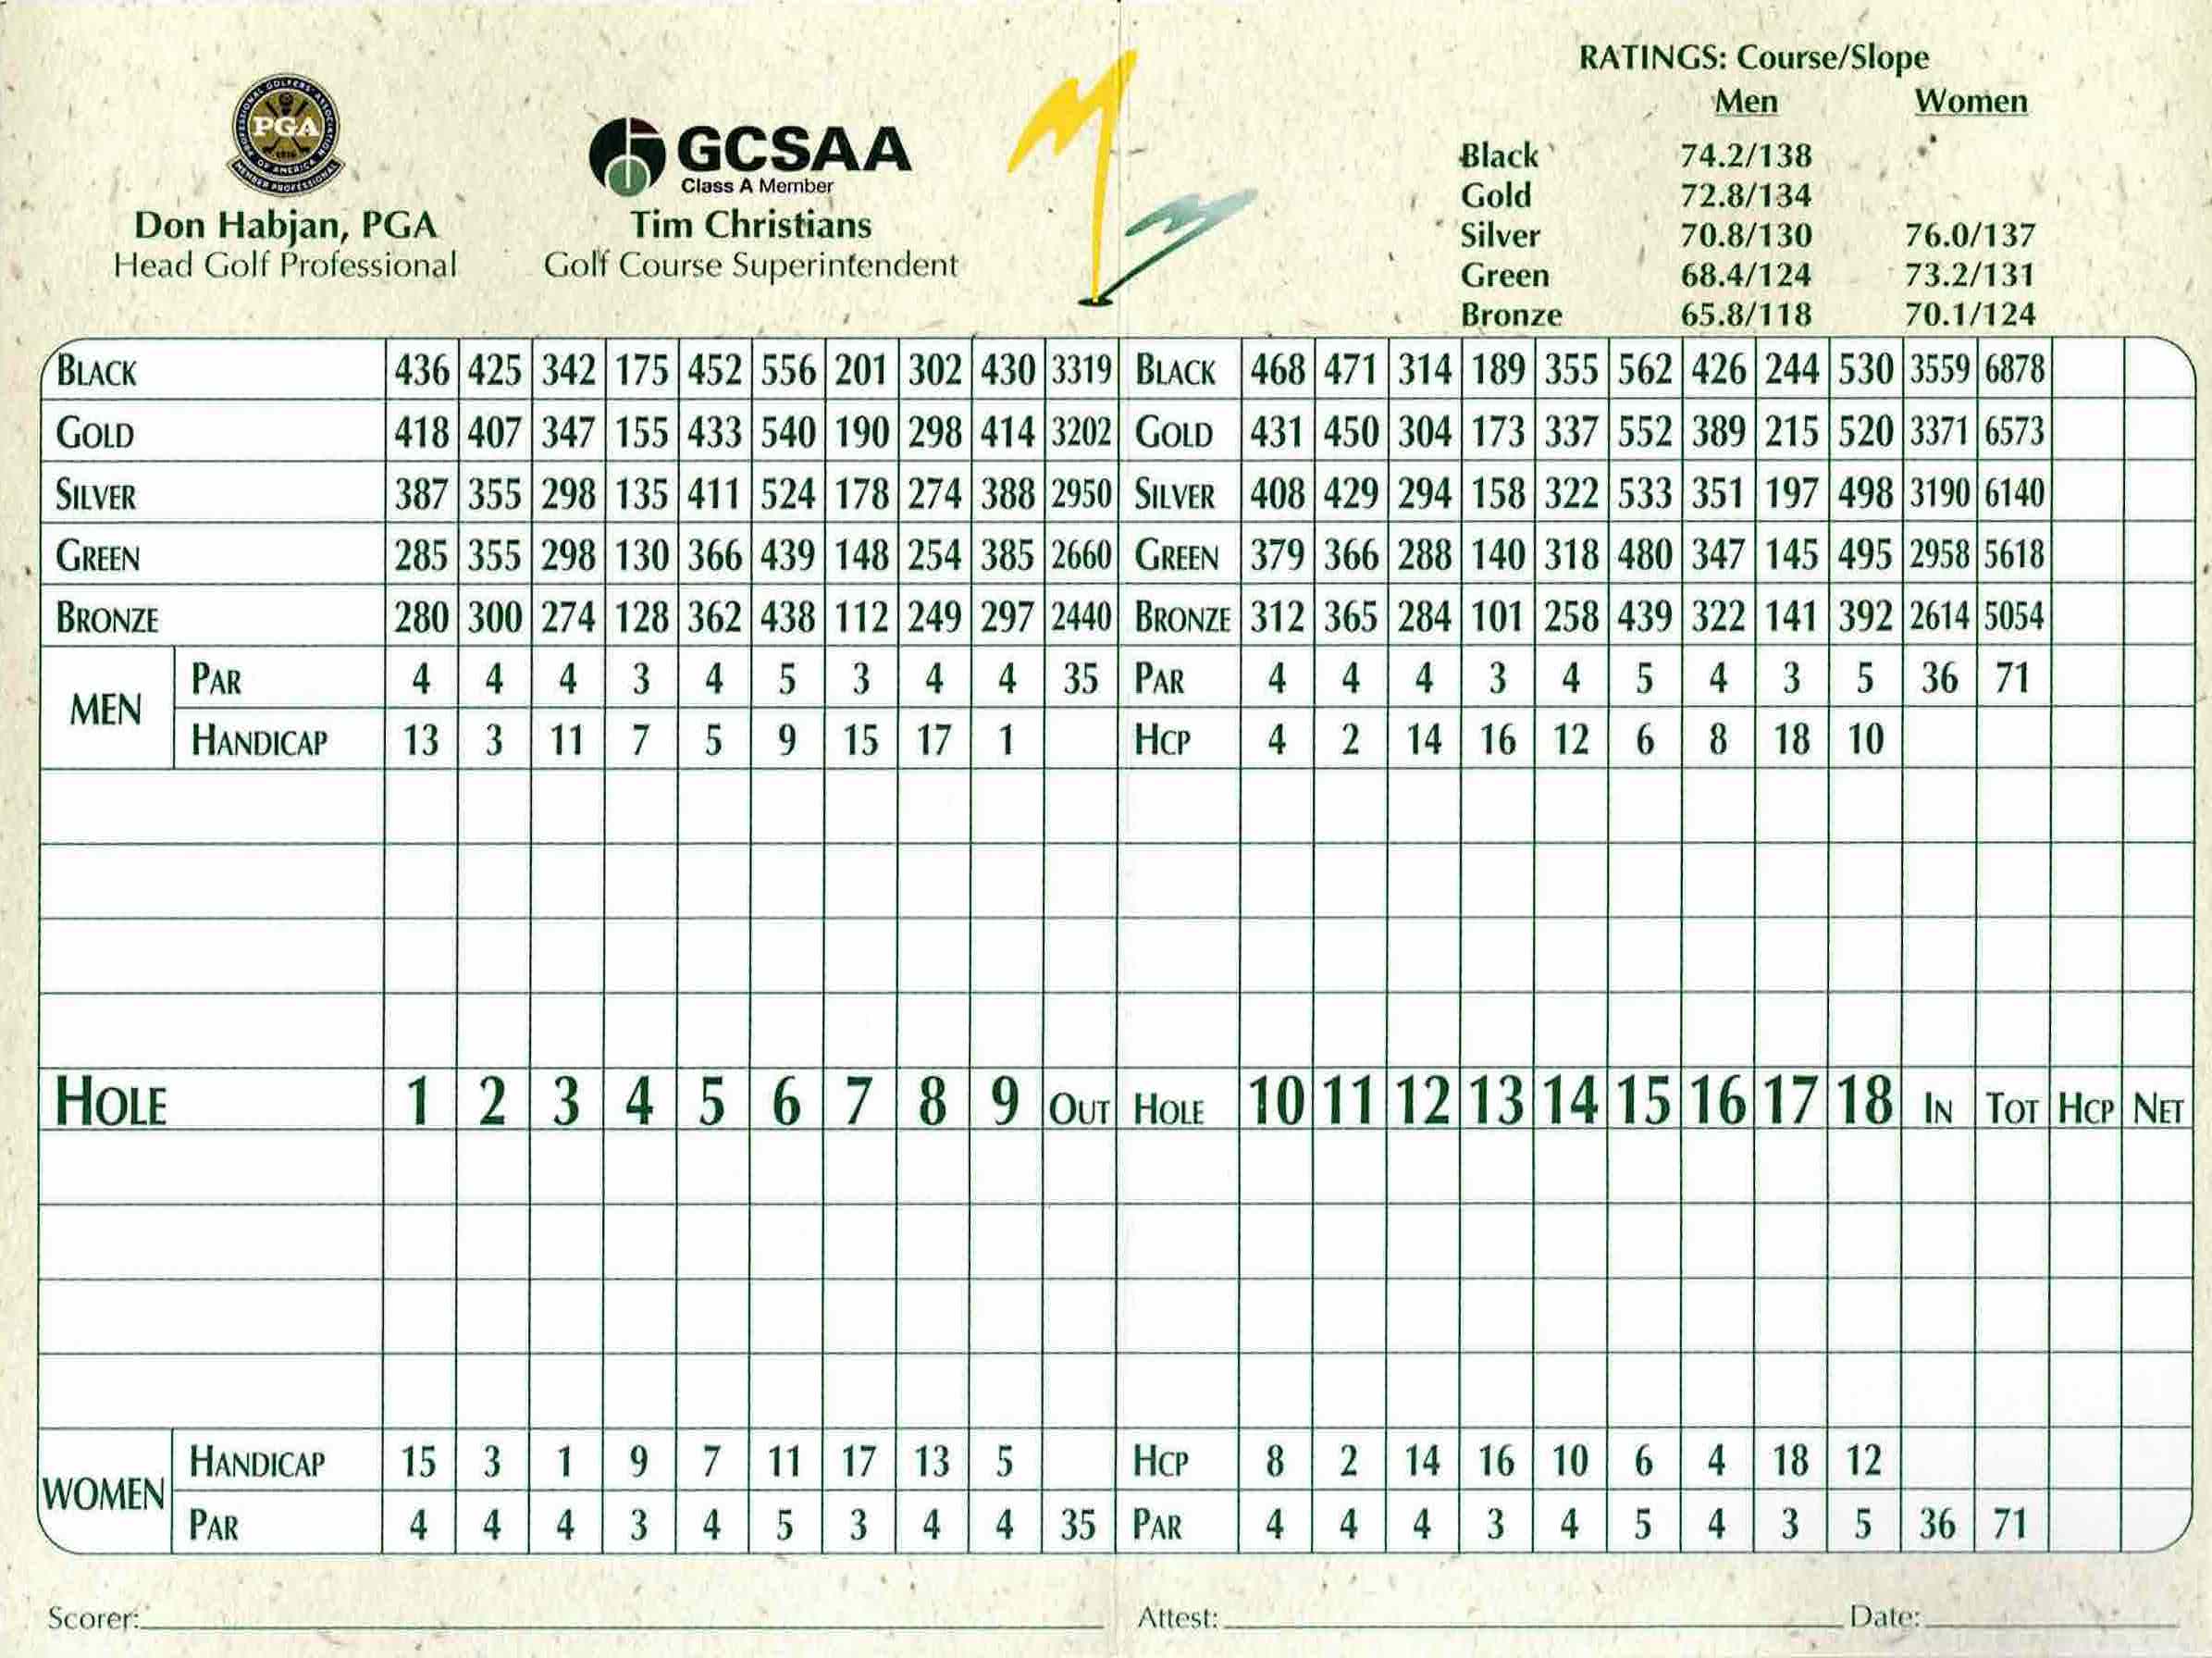 Scan of the scorecard from Makray Memorial Golf Club in Barrington, Illinois. 